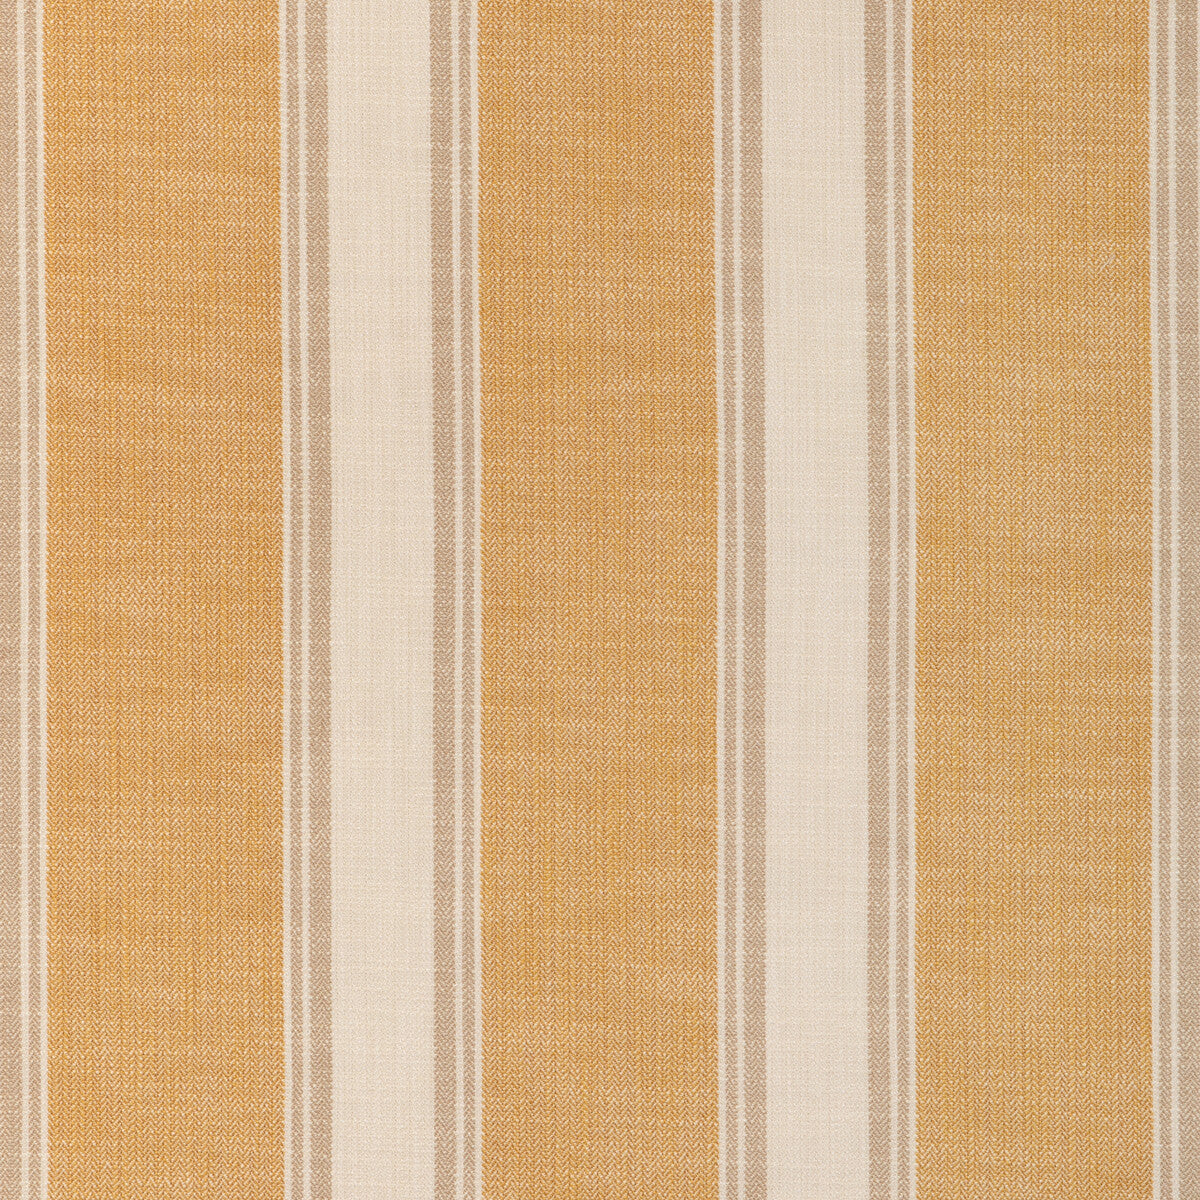 La Riviera Stripe fabric in ochre color - pattern 8024120.416.0 - by Brunschwig &amp; Fils in the Les Ensembliers L&